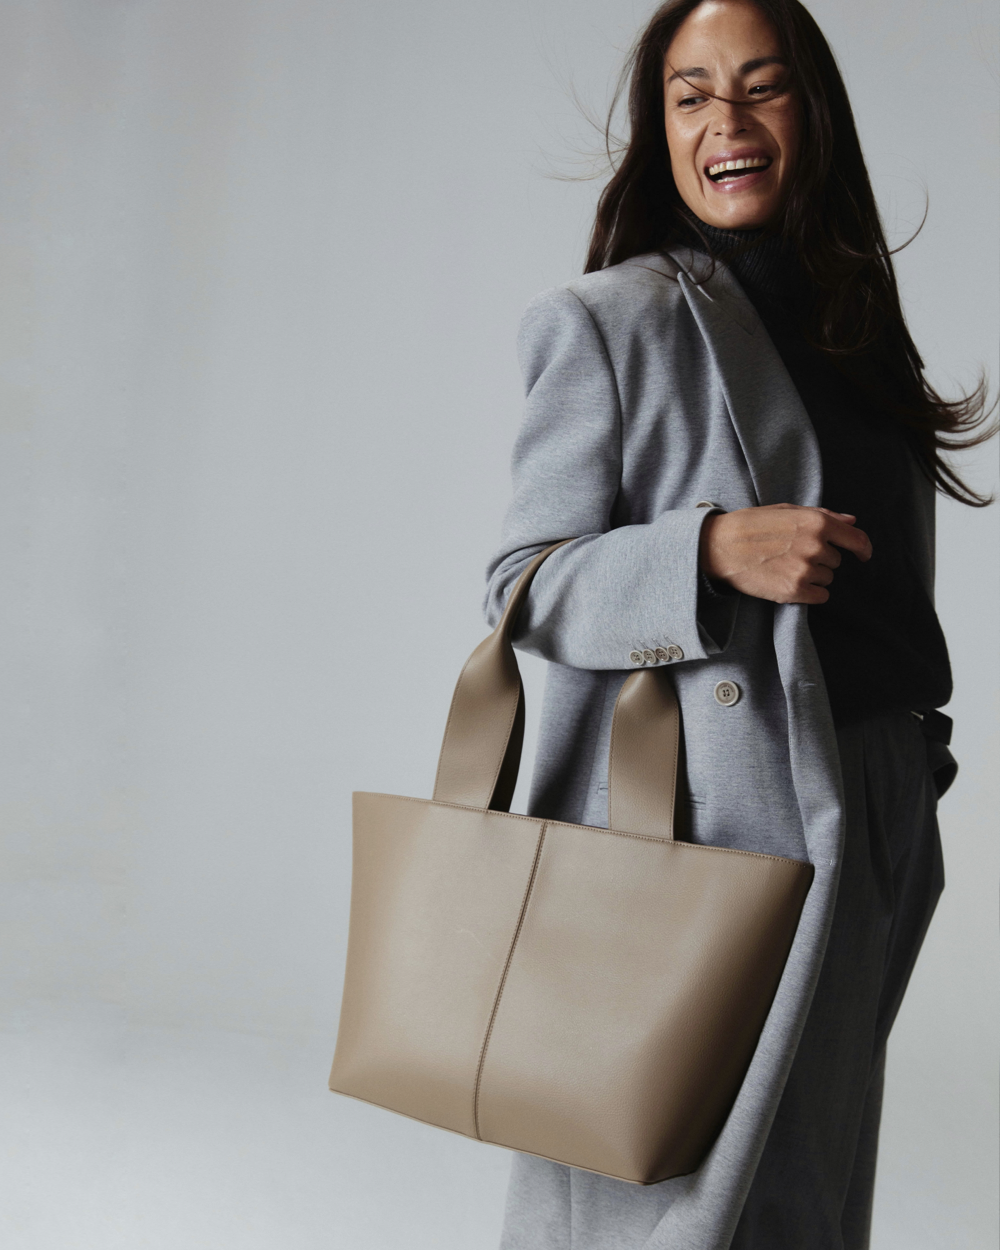 Mini Shoulder Bag Taupe – Freja New York